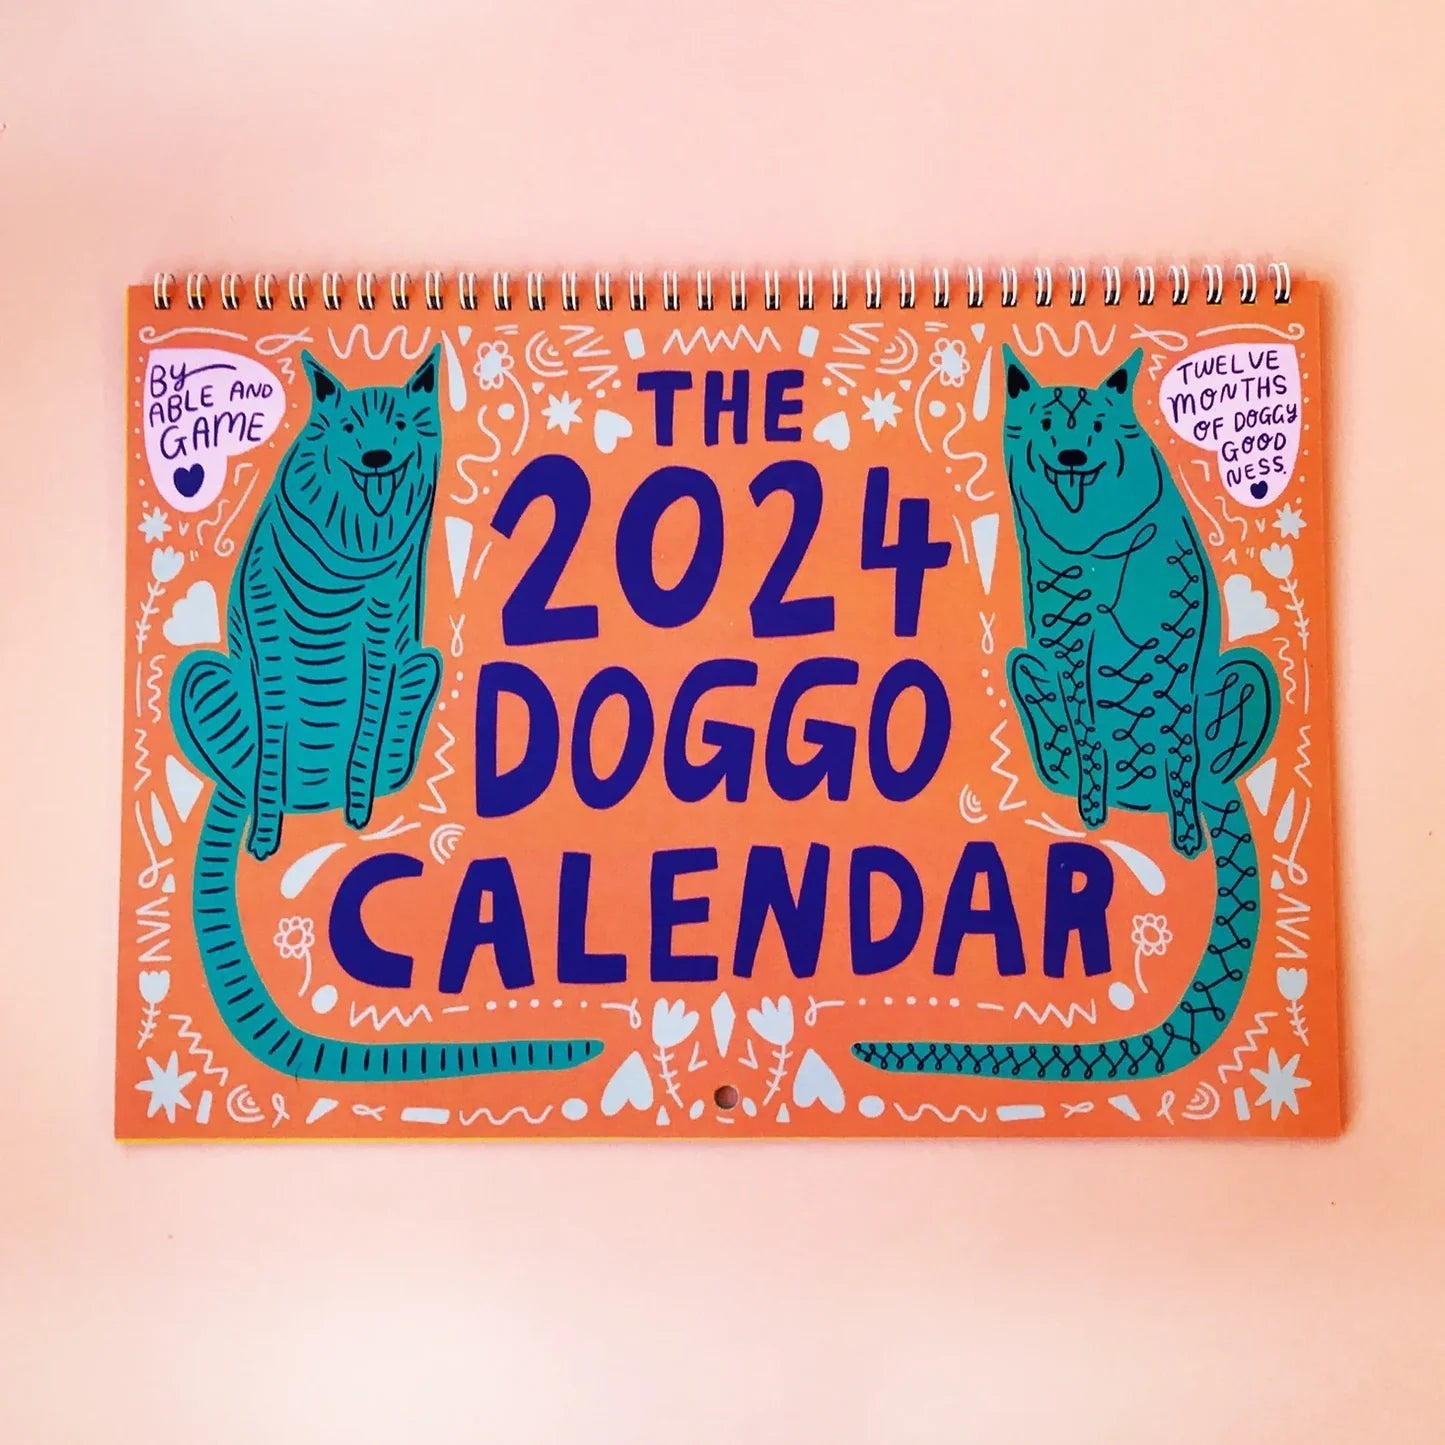 Able and Game 2024 Doggo Calendar